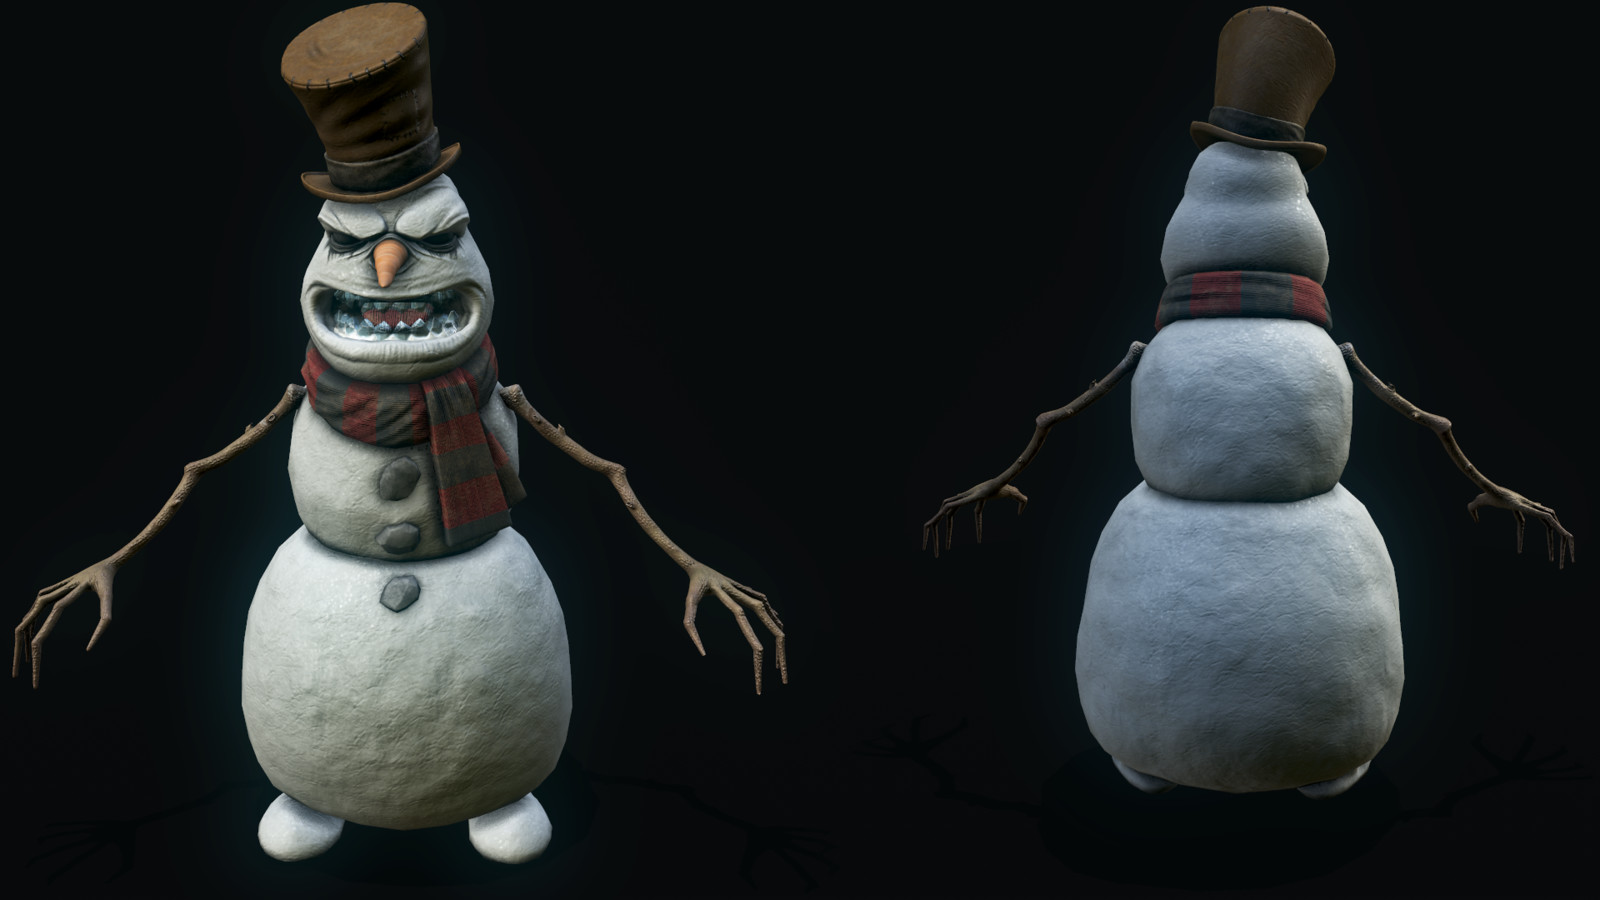 Evil snowman.